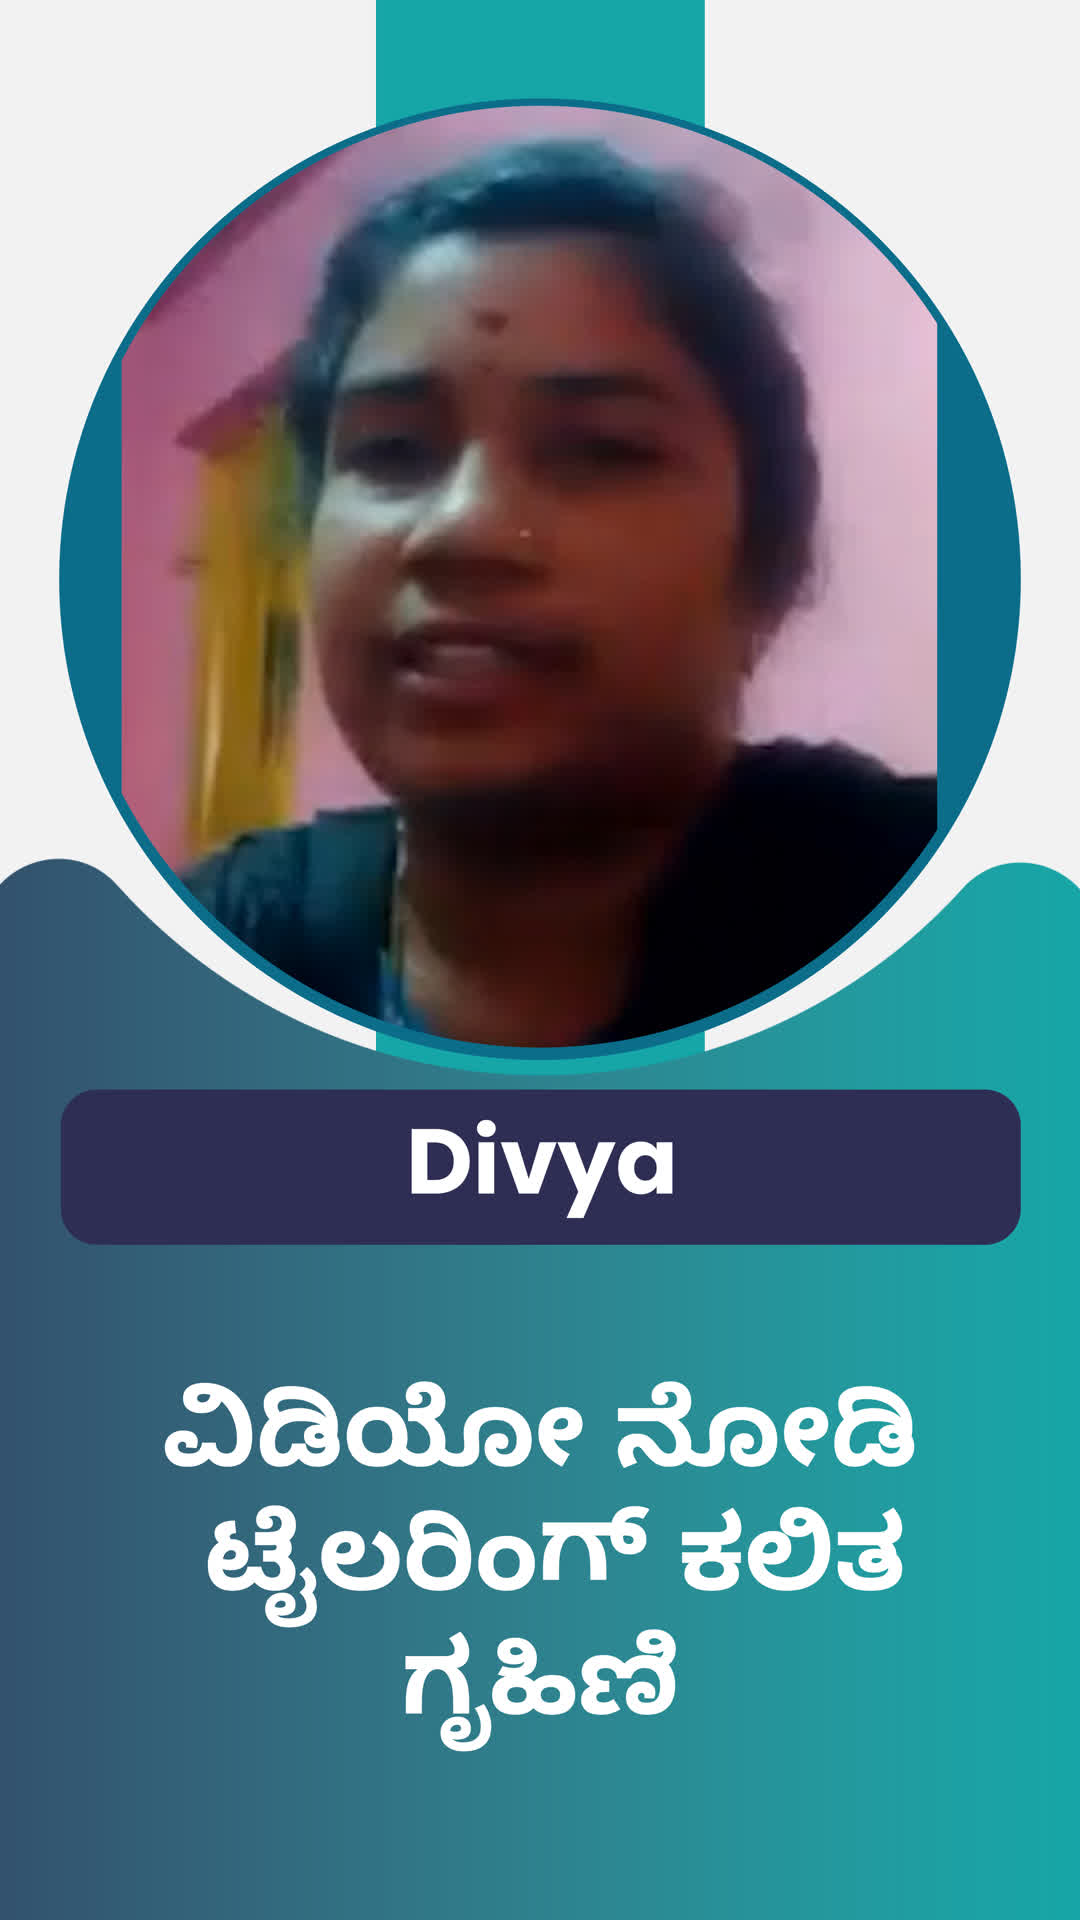 Divya's Honest Review of ffreedom app - Coorg ,Karnataka